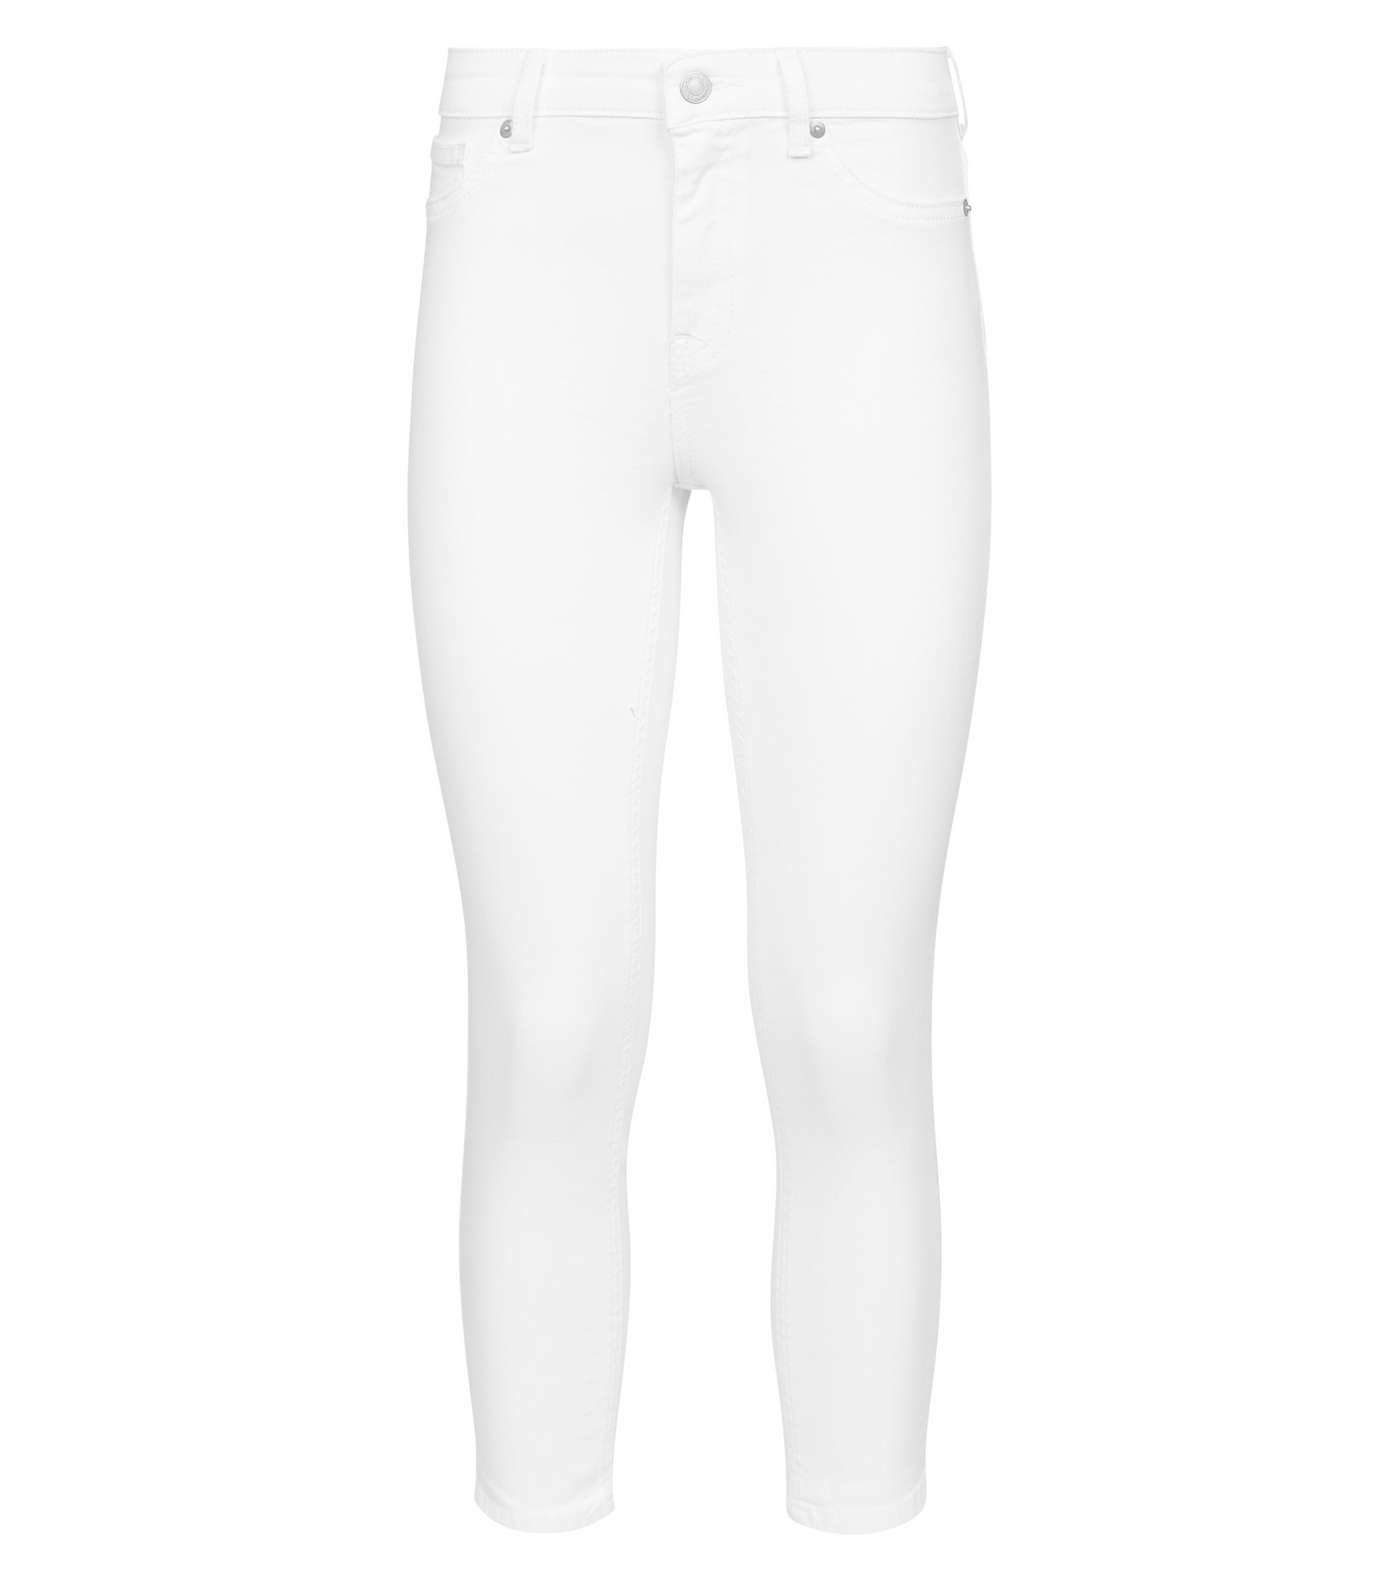 White Cropped Skinny Jenna Jeans Image 4